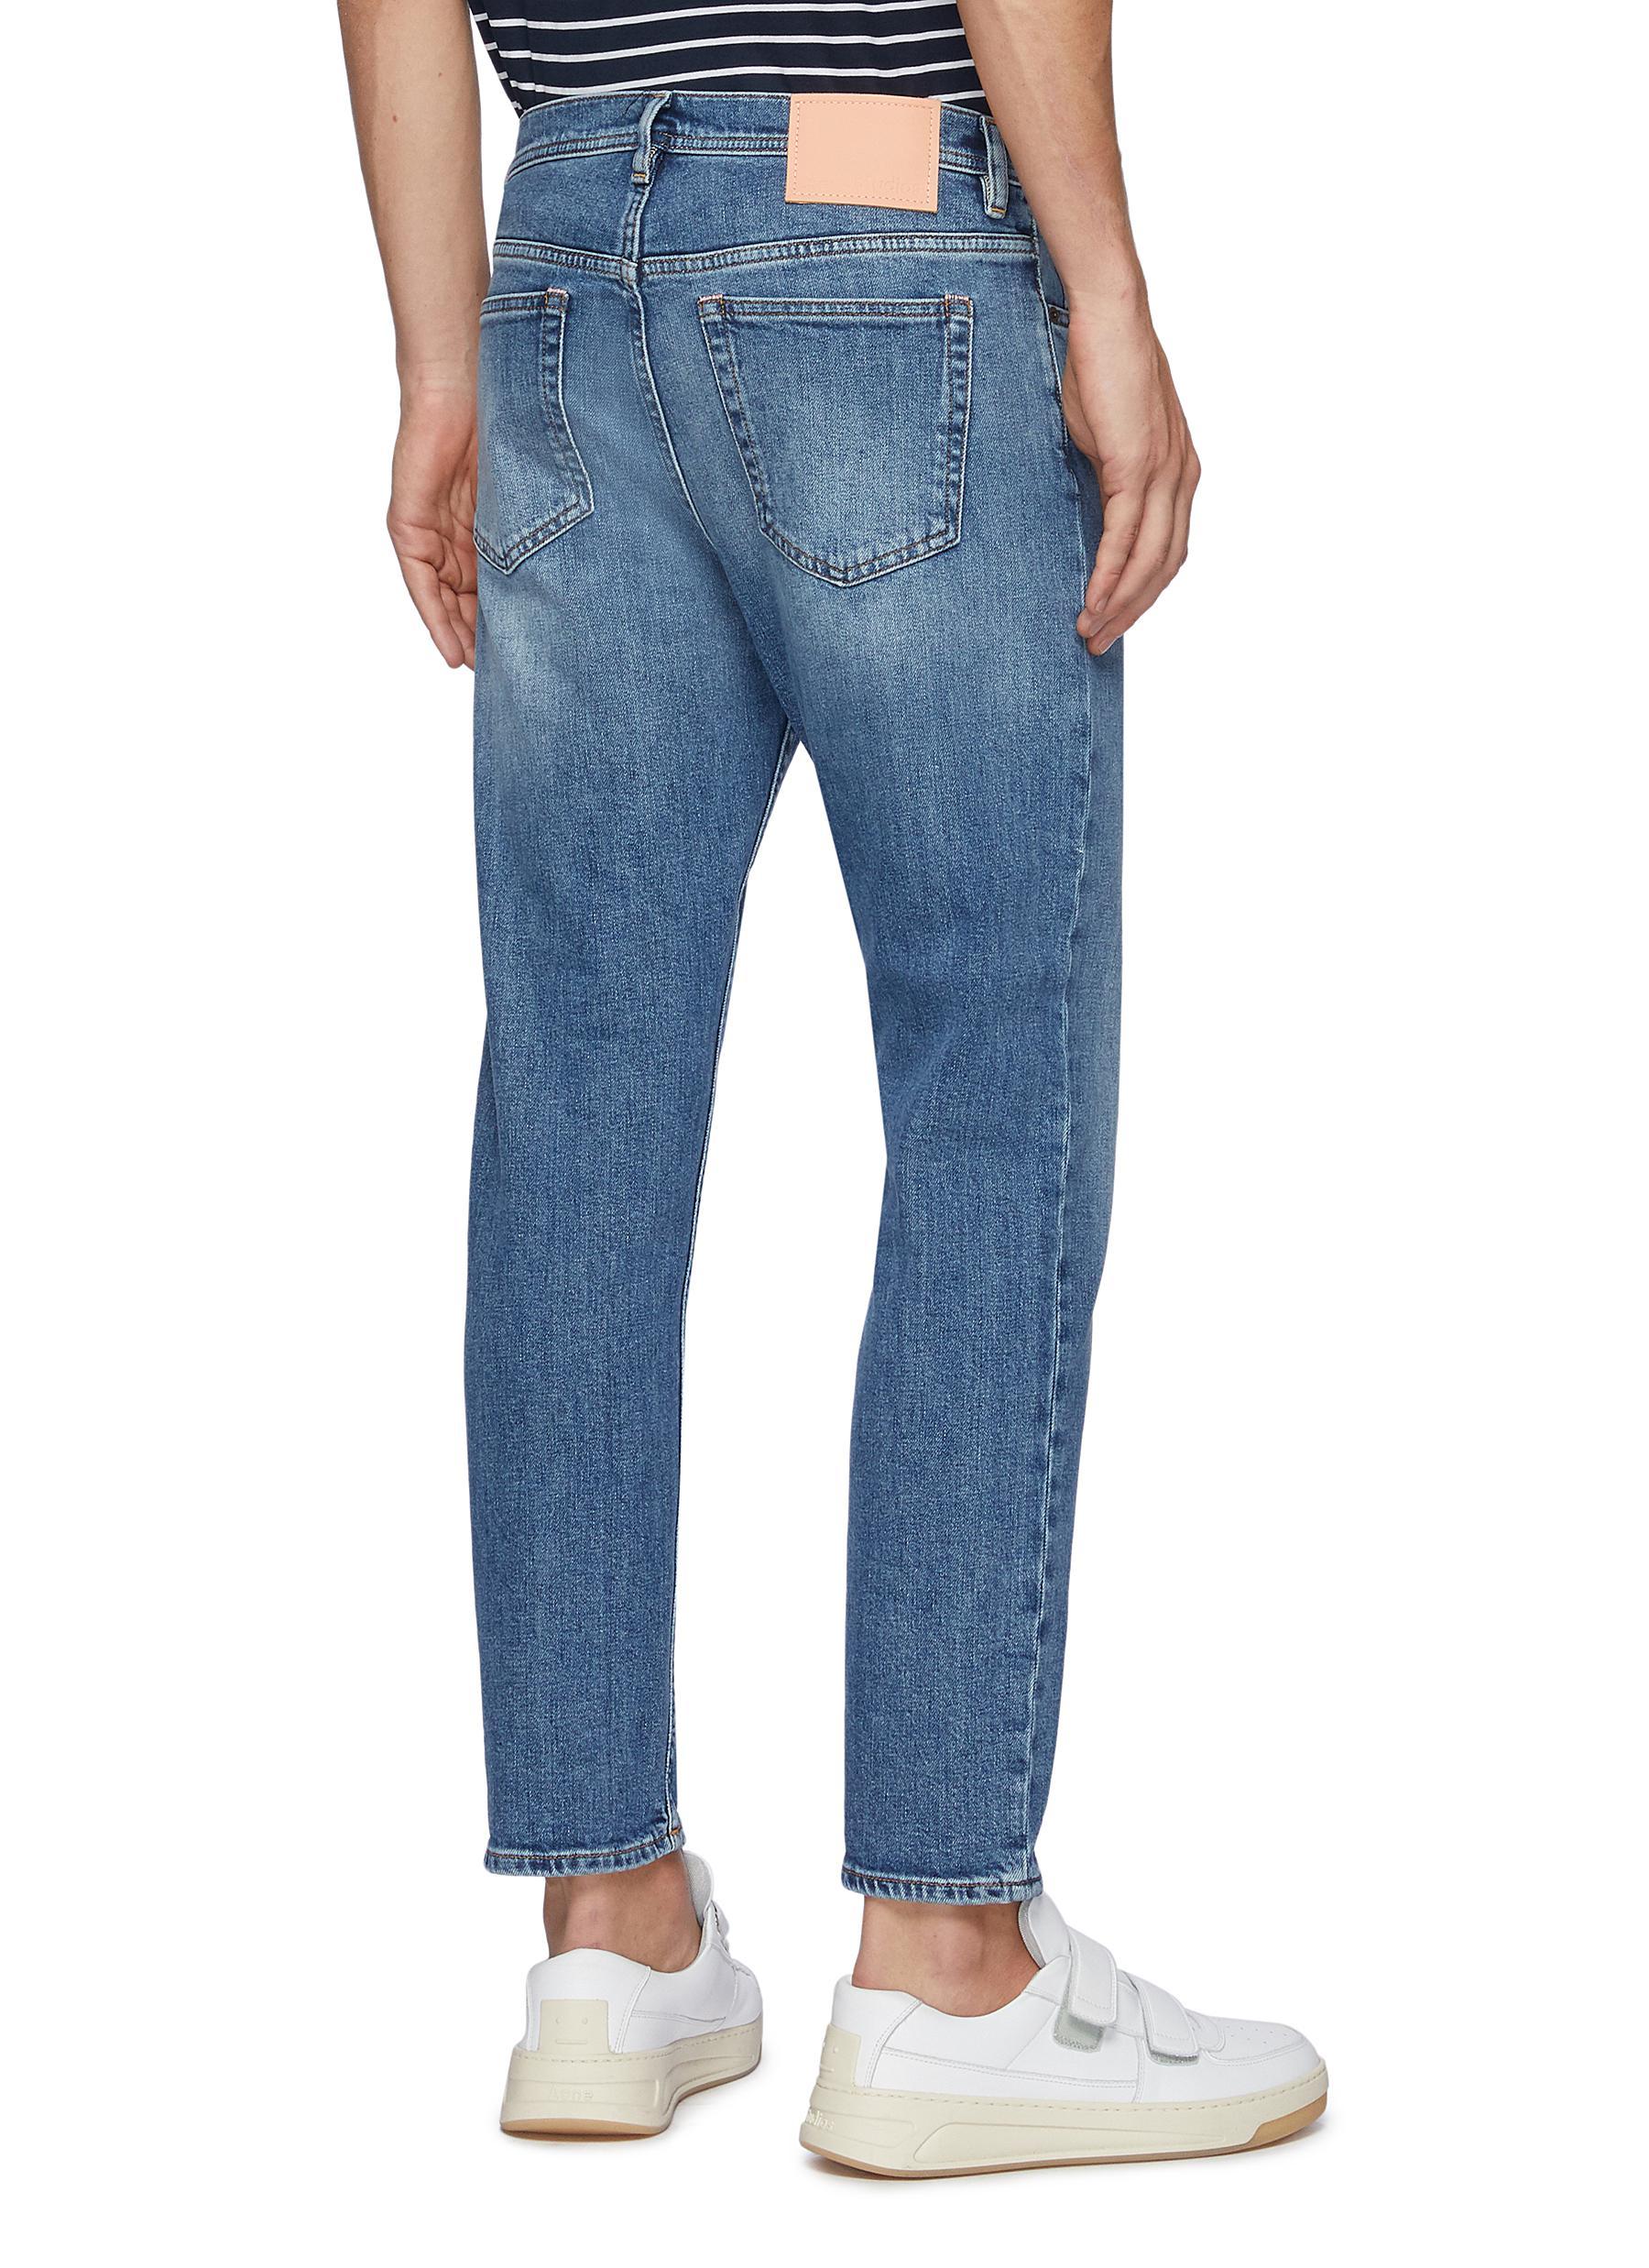 Acne Studios Mid Rise Crop Whiskered Denim Jeans in Blue for Men - Lyst